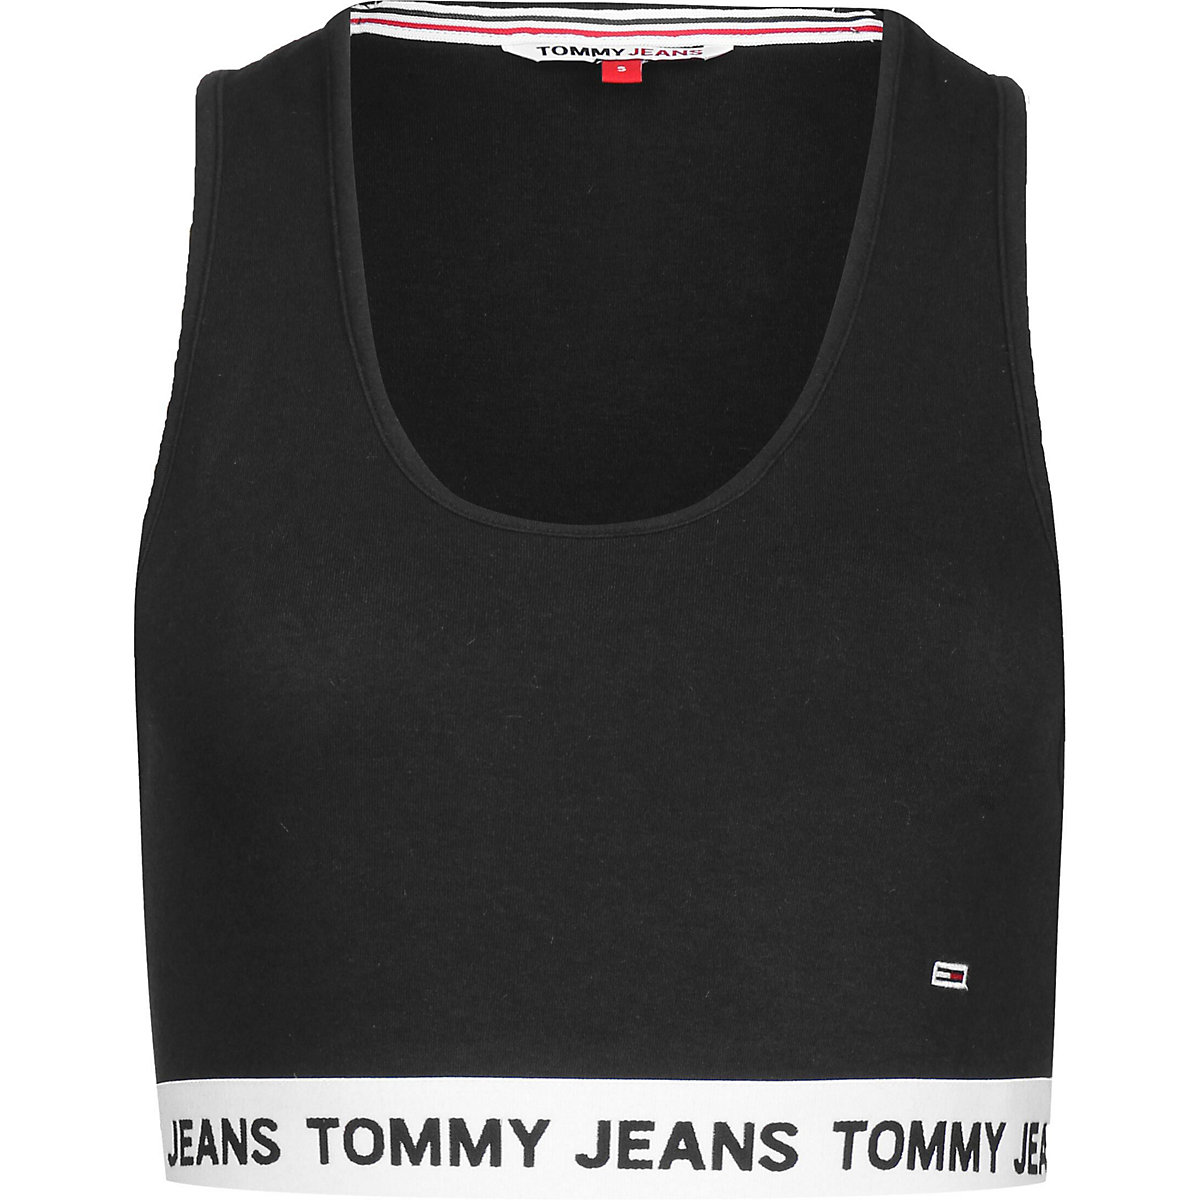 TOMMY JEANS Tommy Jeans Crop Top Logo Tops schwarz